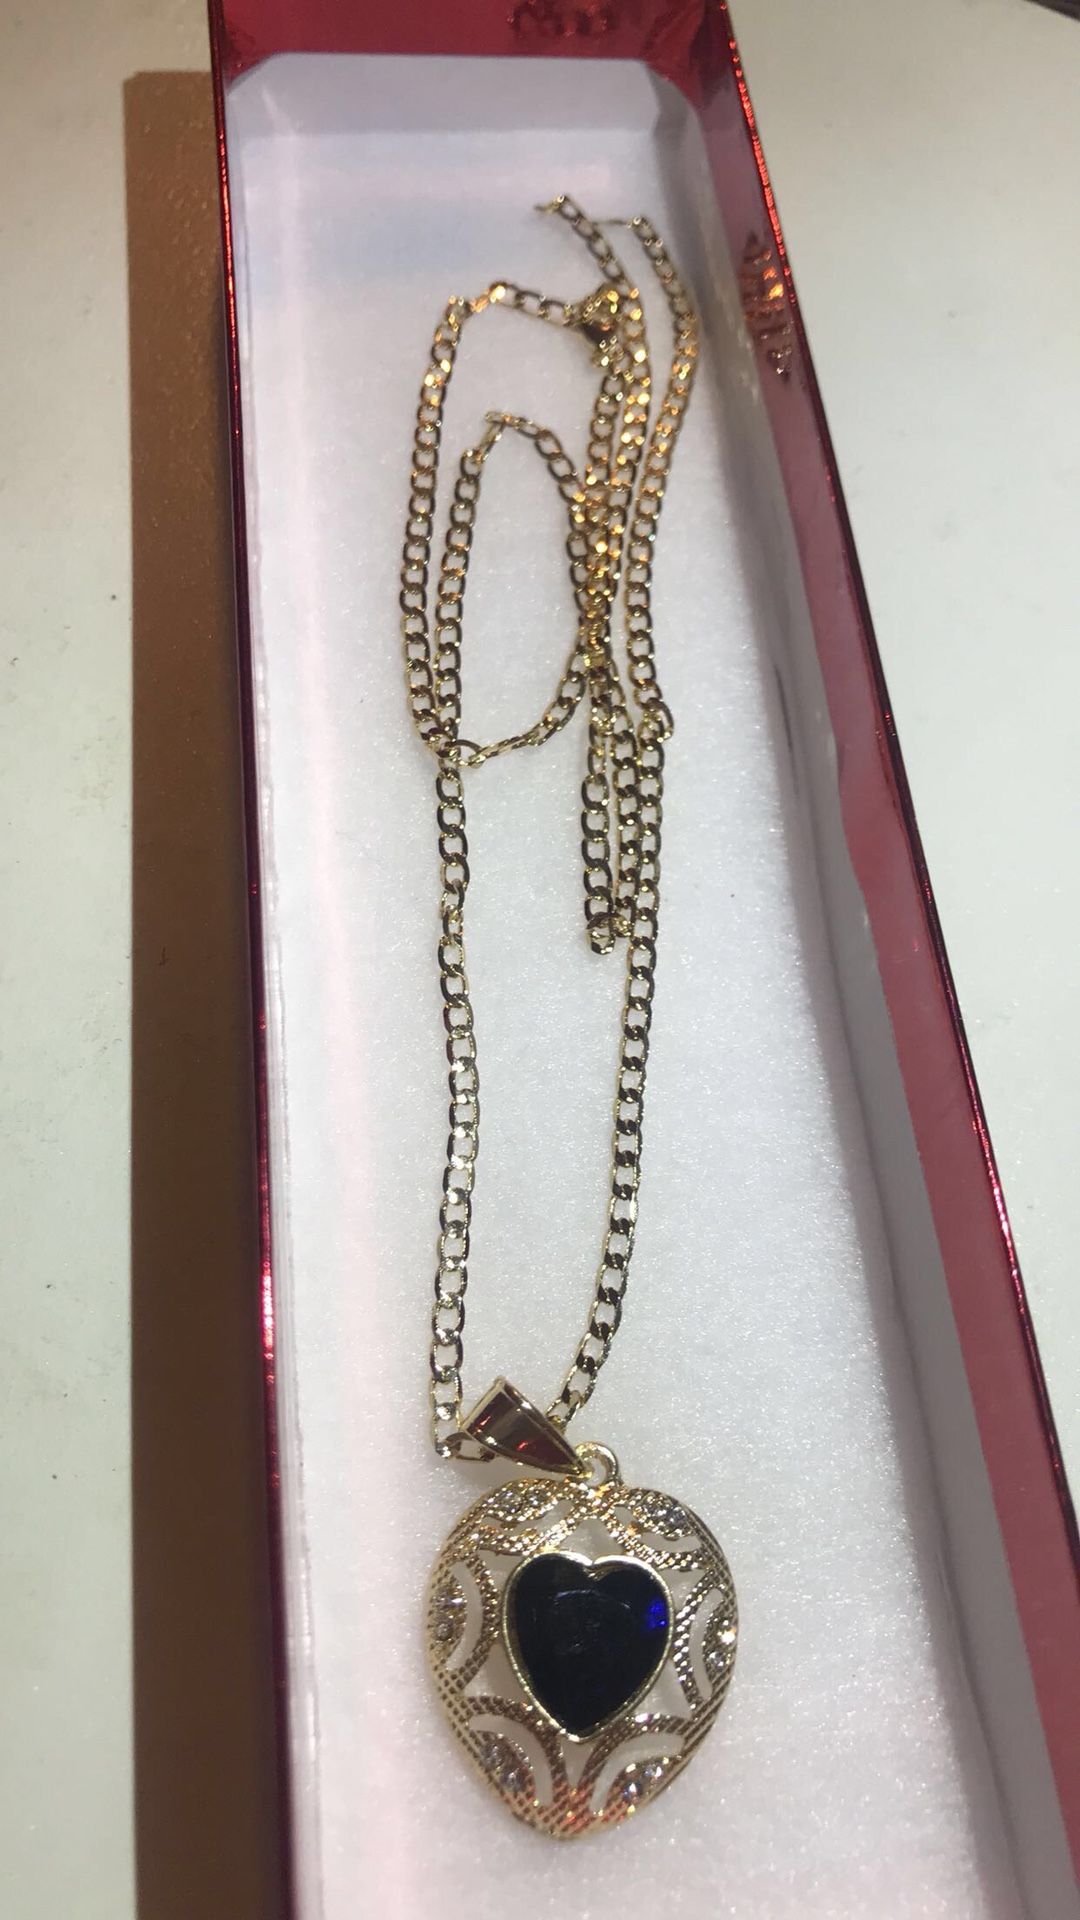 Nice chain and heart shape pendant